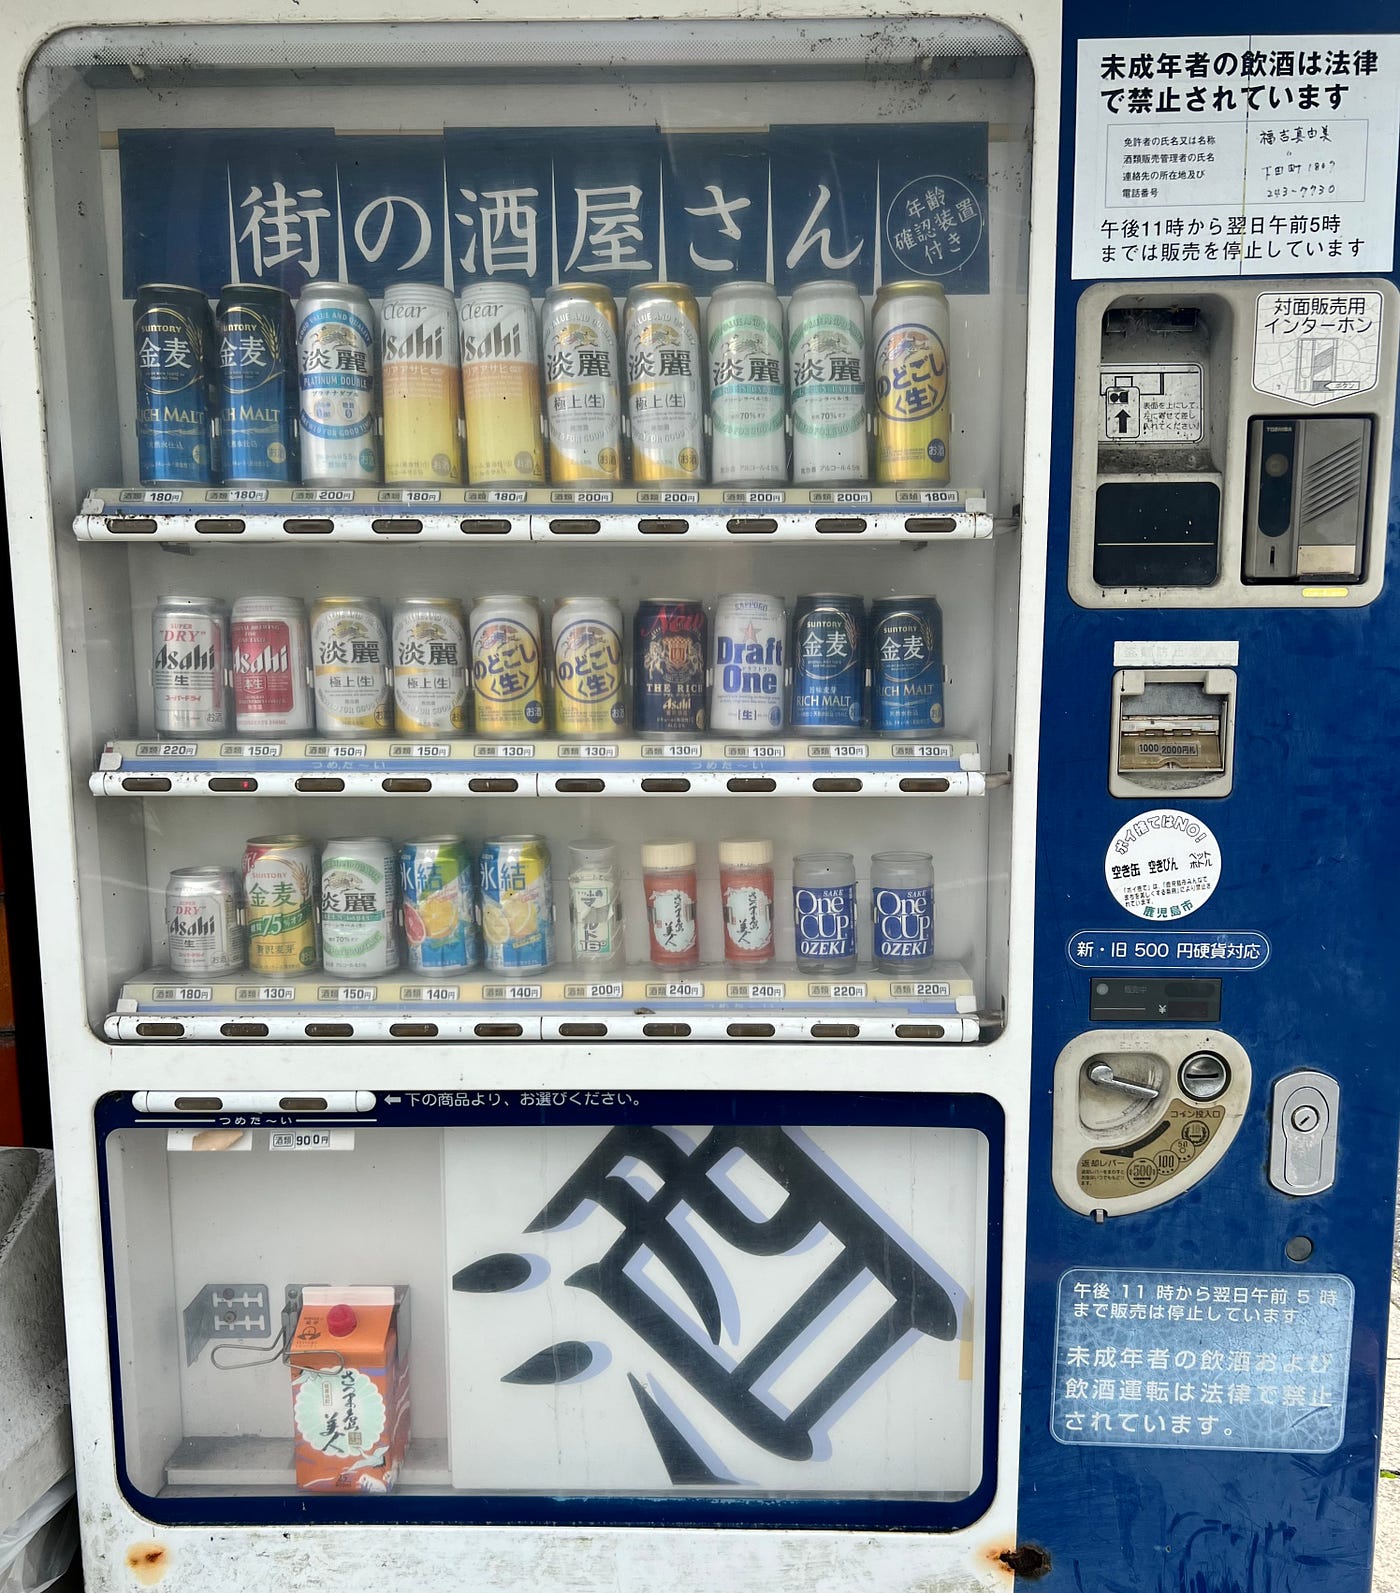 Japan's used panty vending machines: fact versus fiction